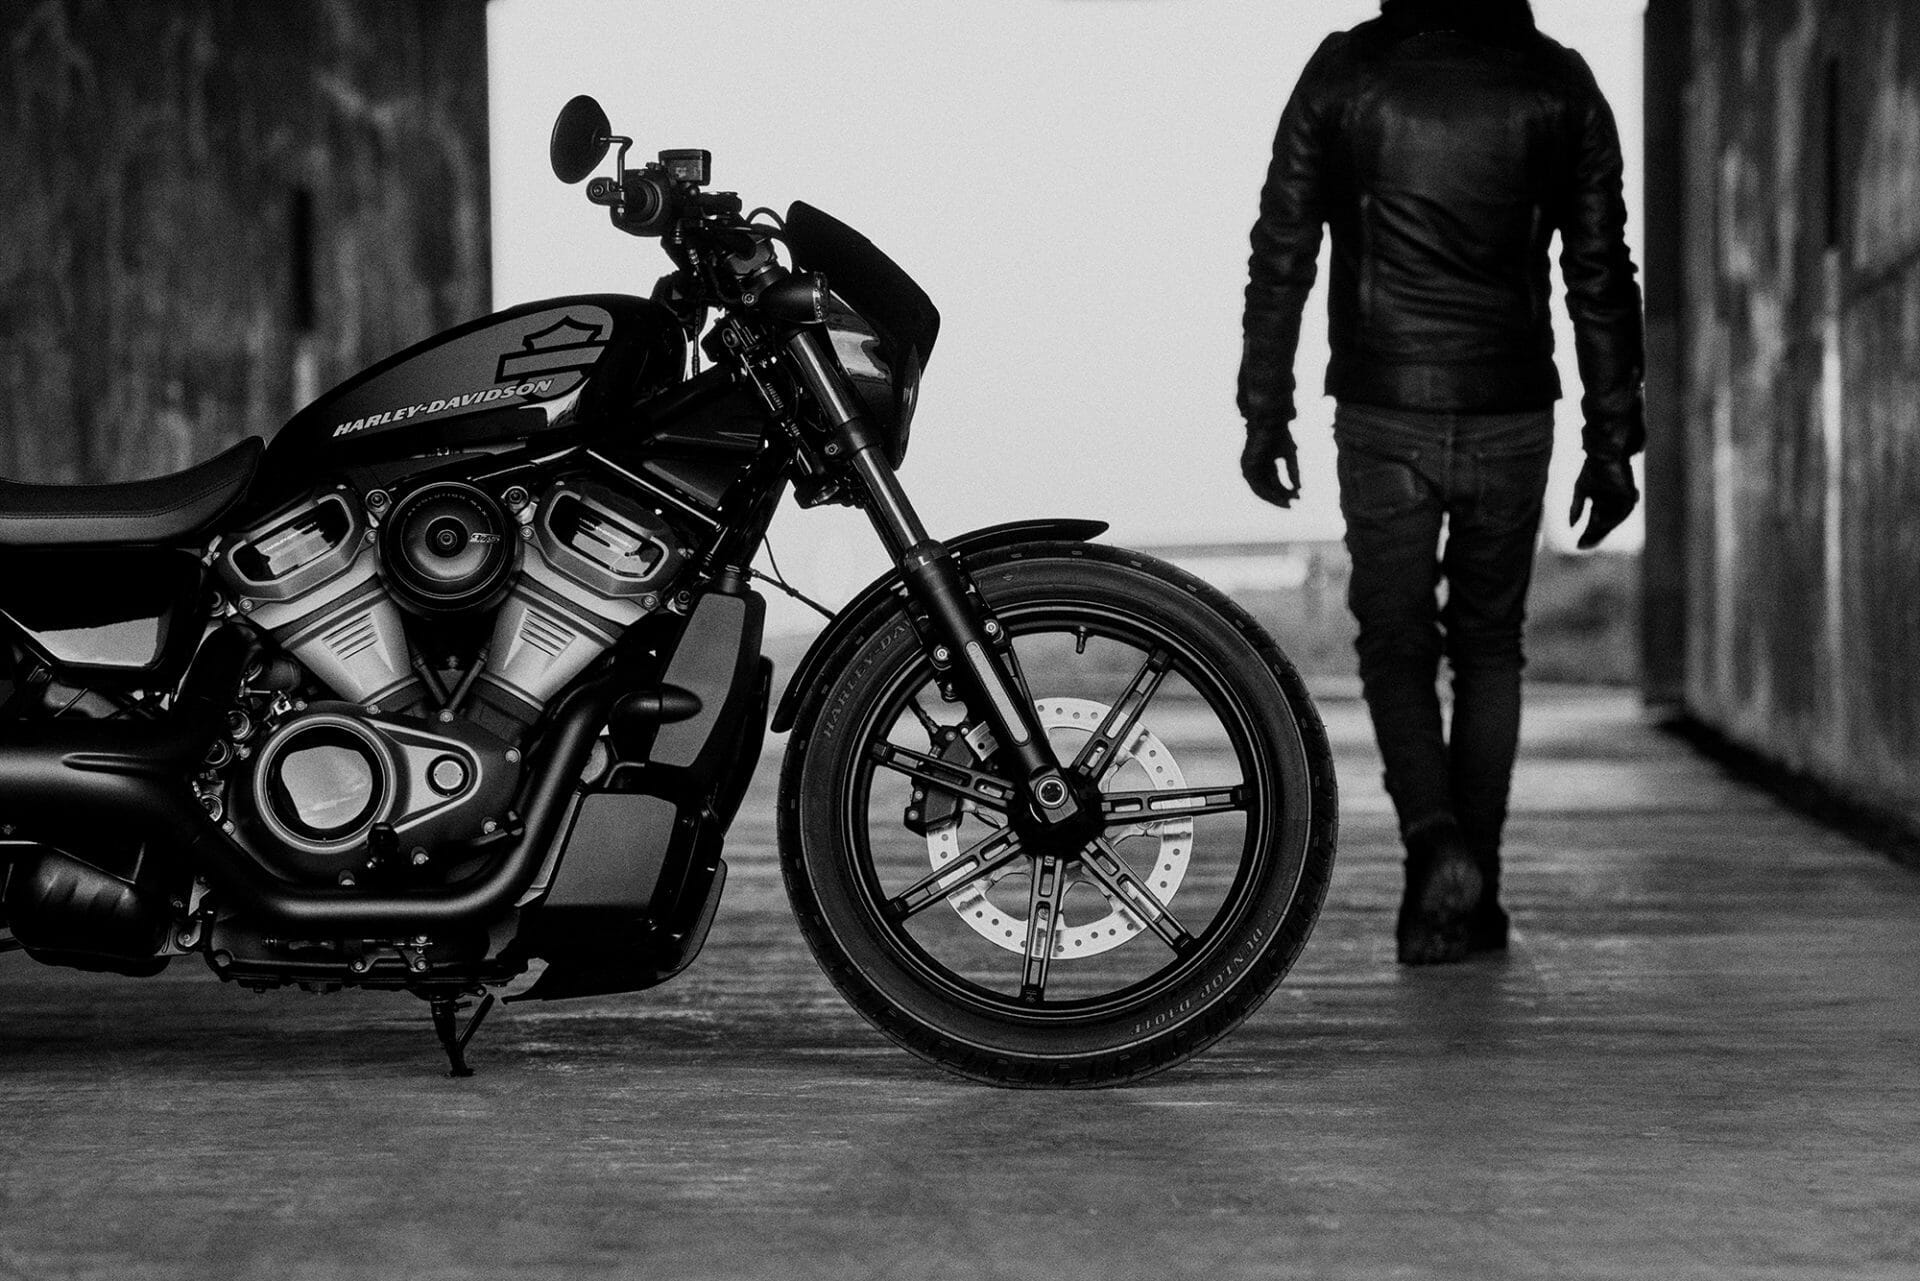 Harley-Davidson Nightster vorgestellt
- MOTORCYCLES.NEWS